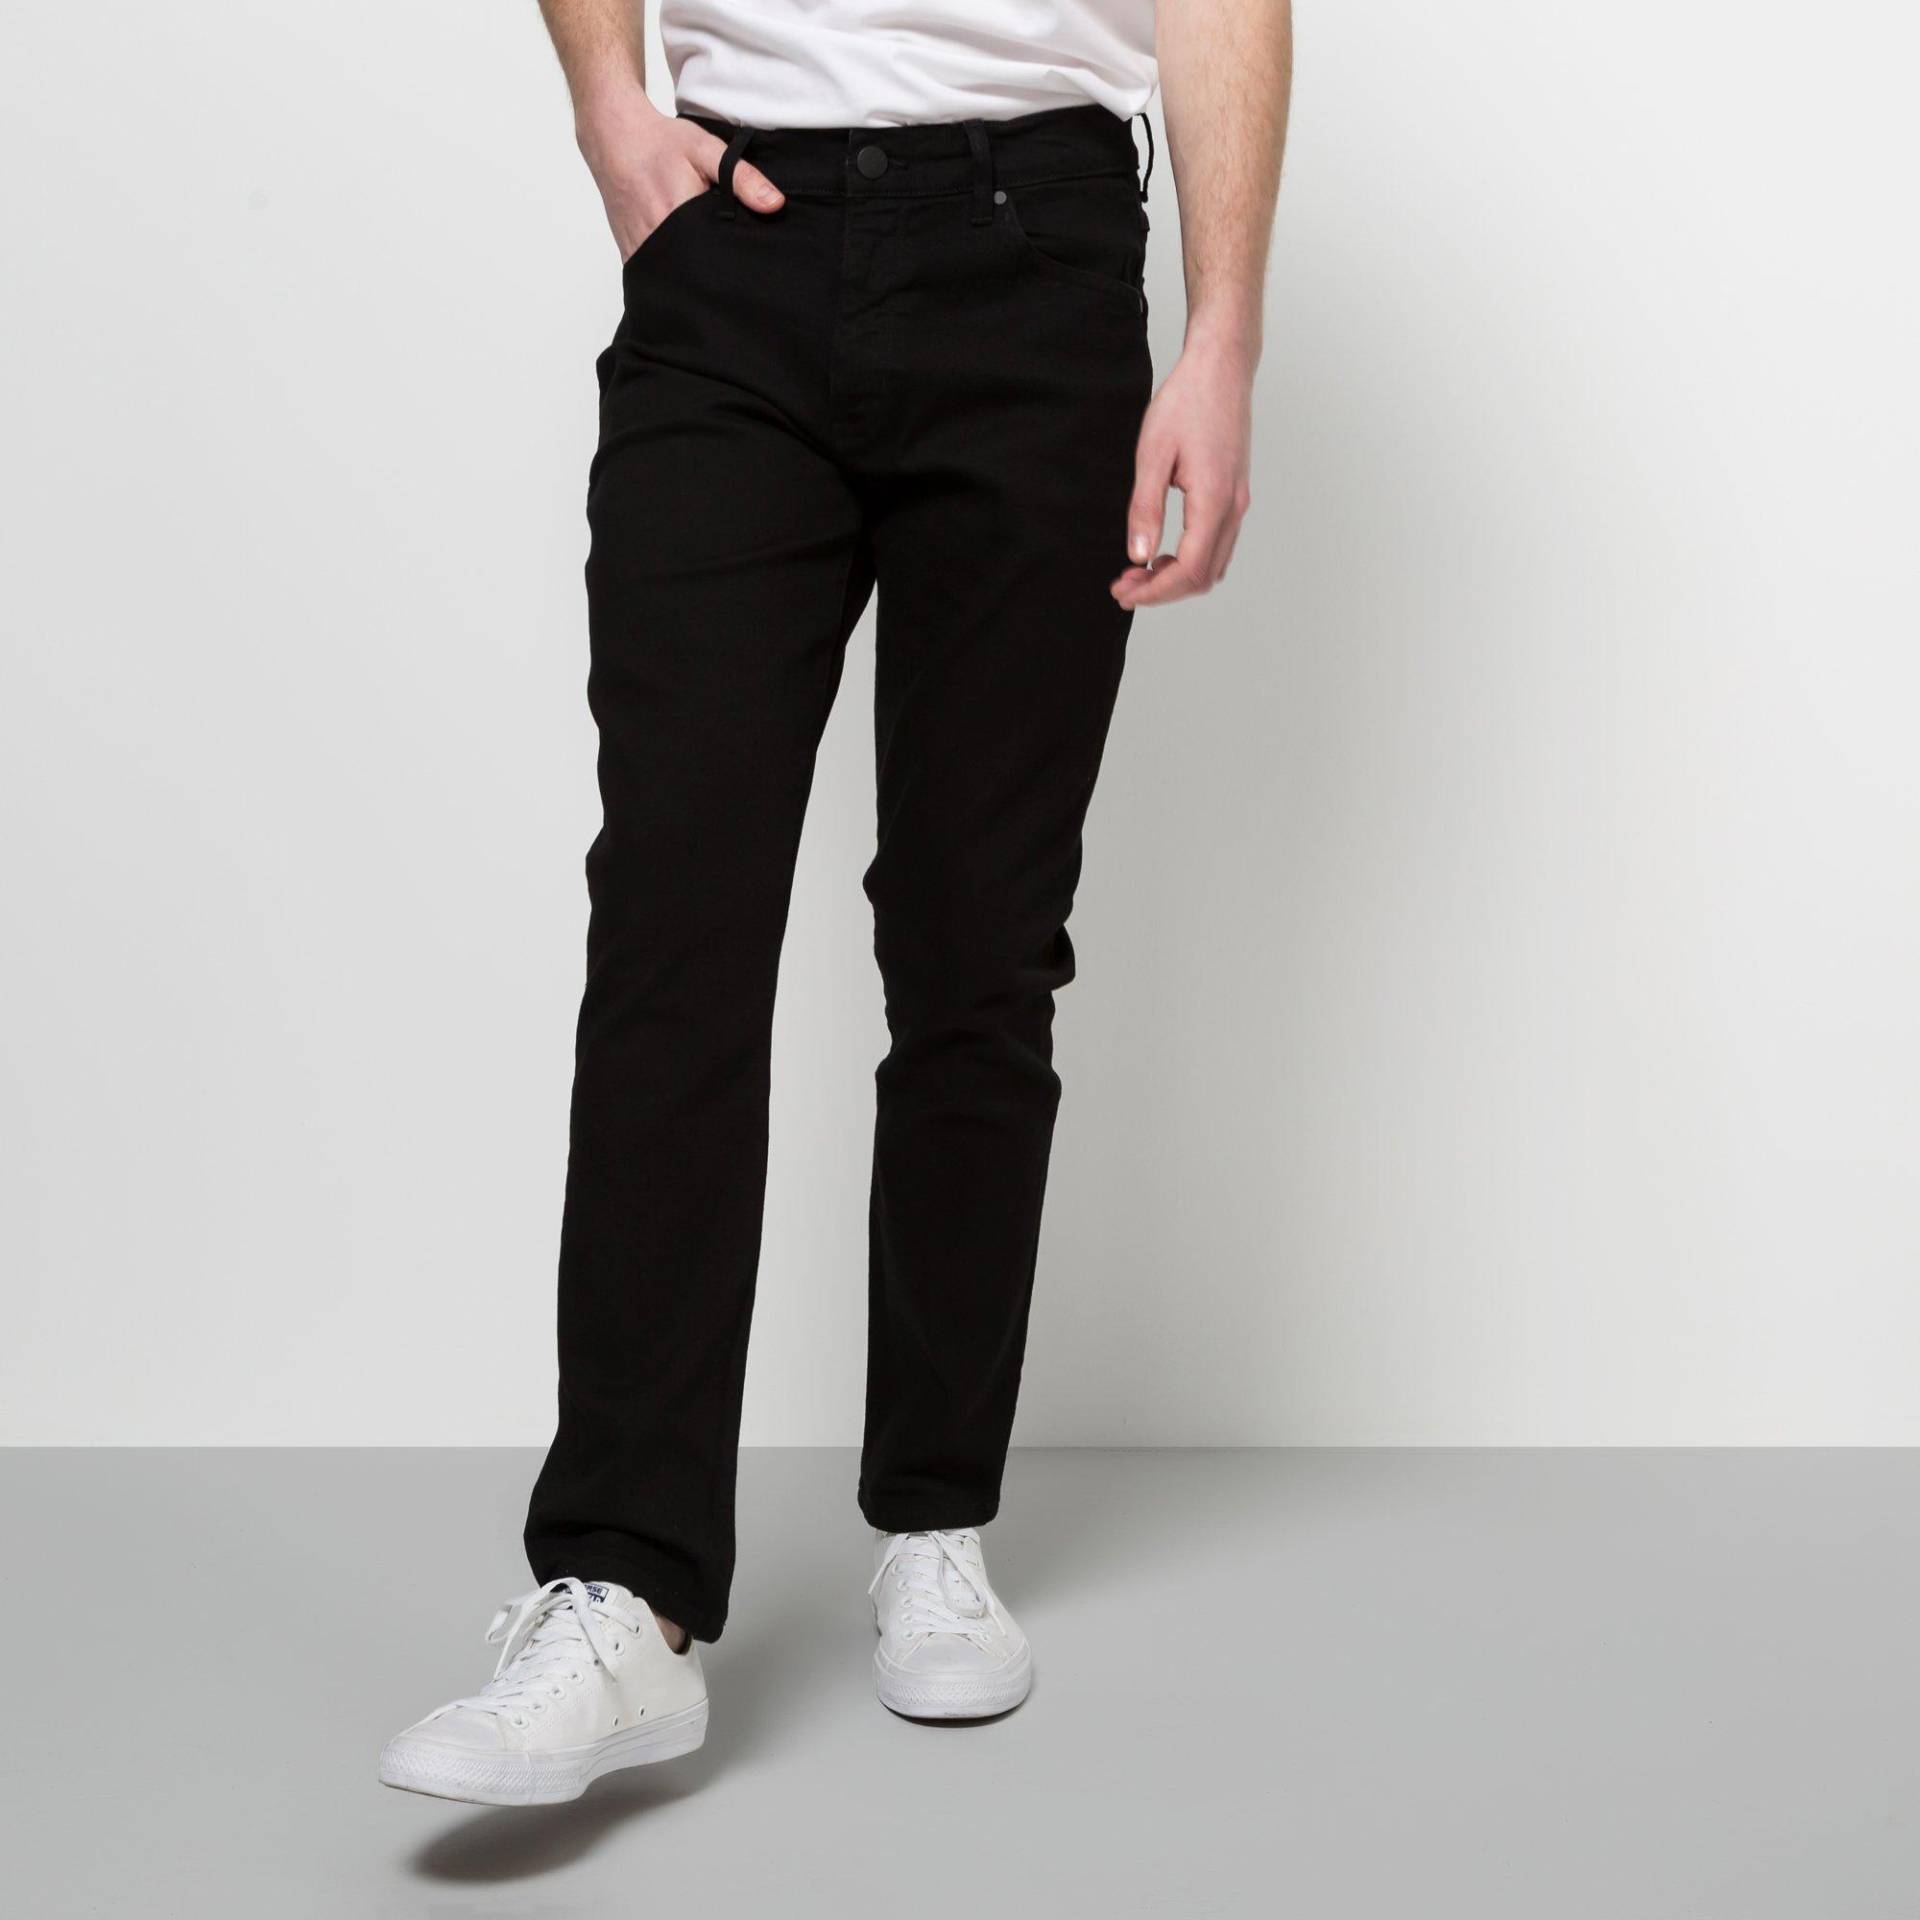 Jeans, Slim Fit Herren Black L34/W34 von Wrangler